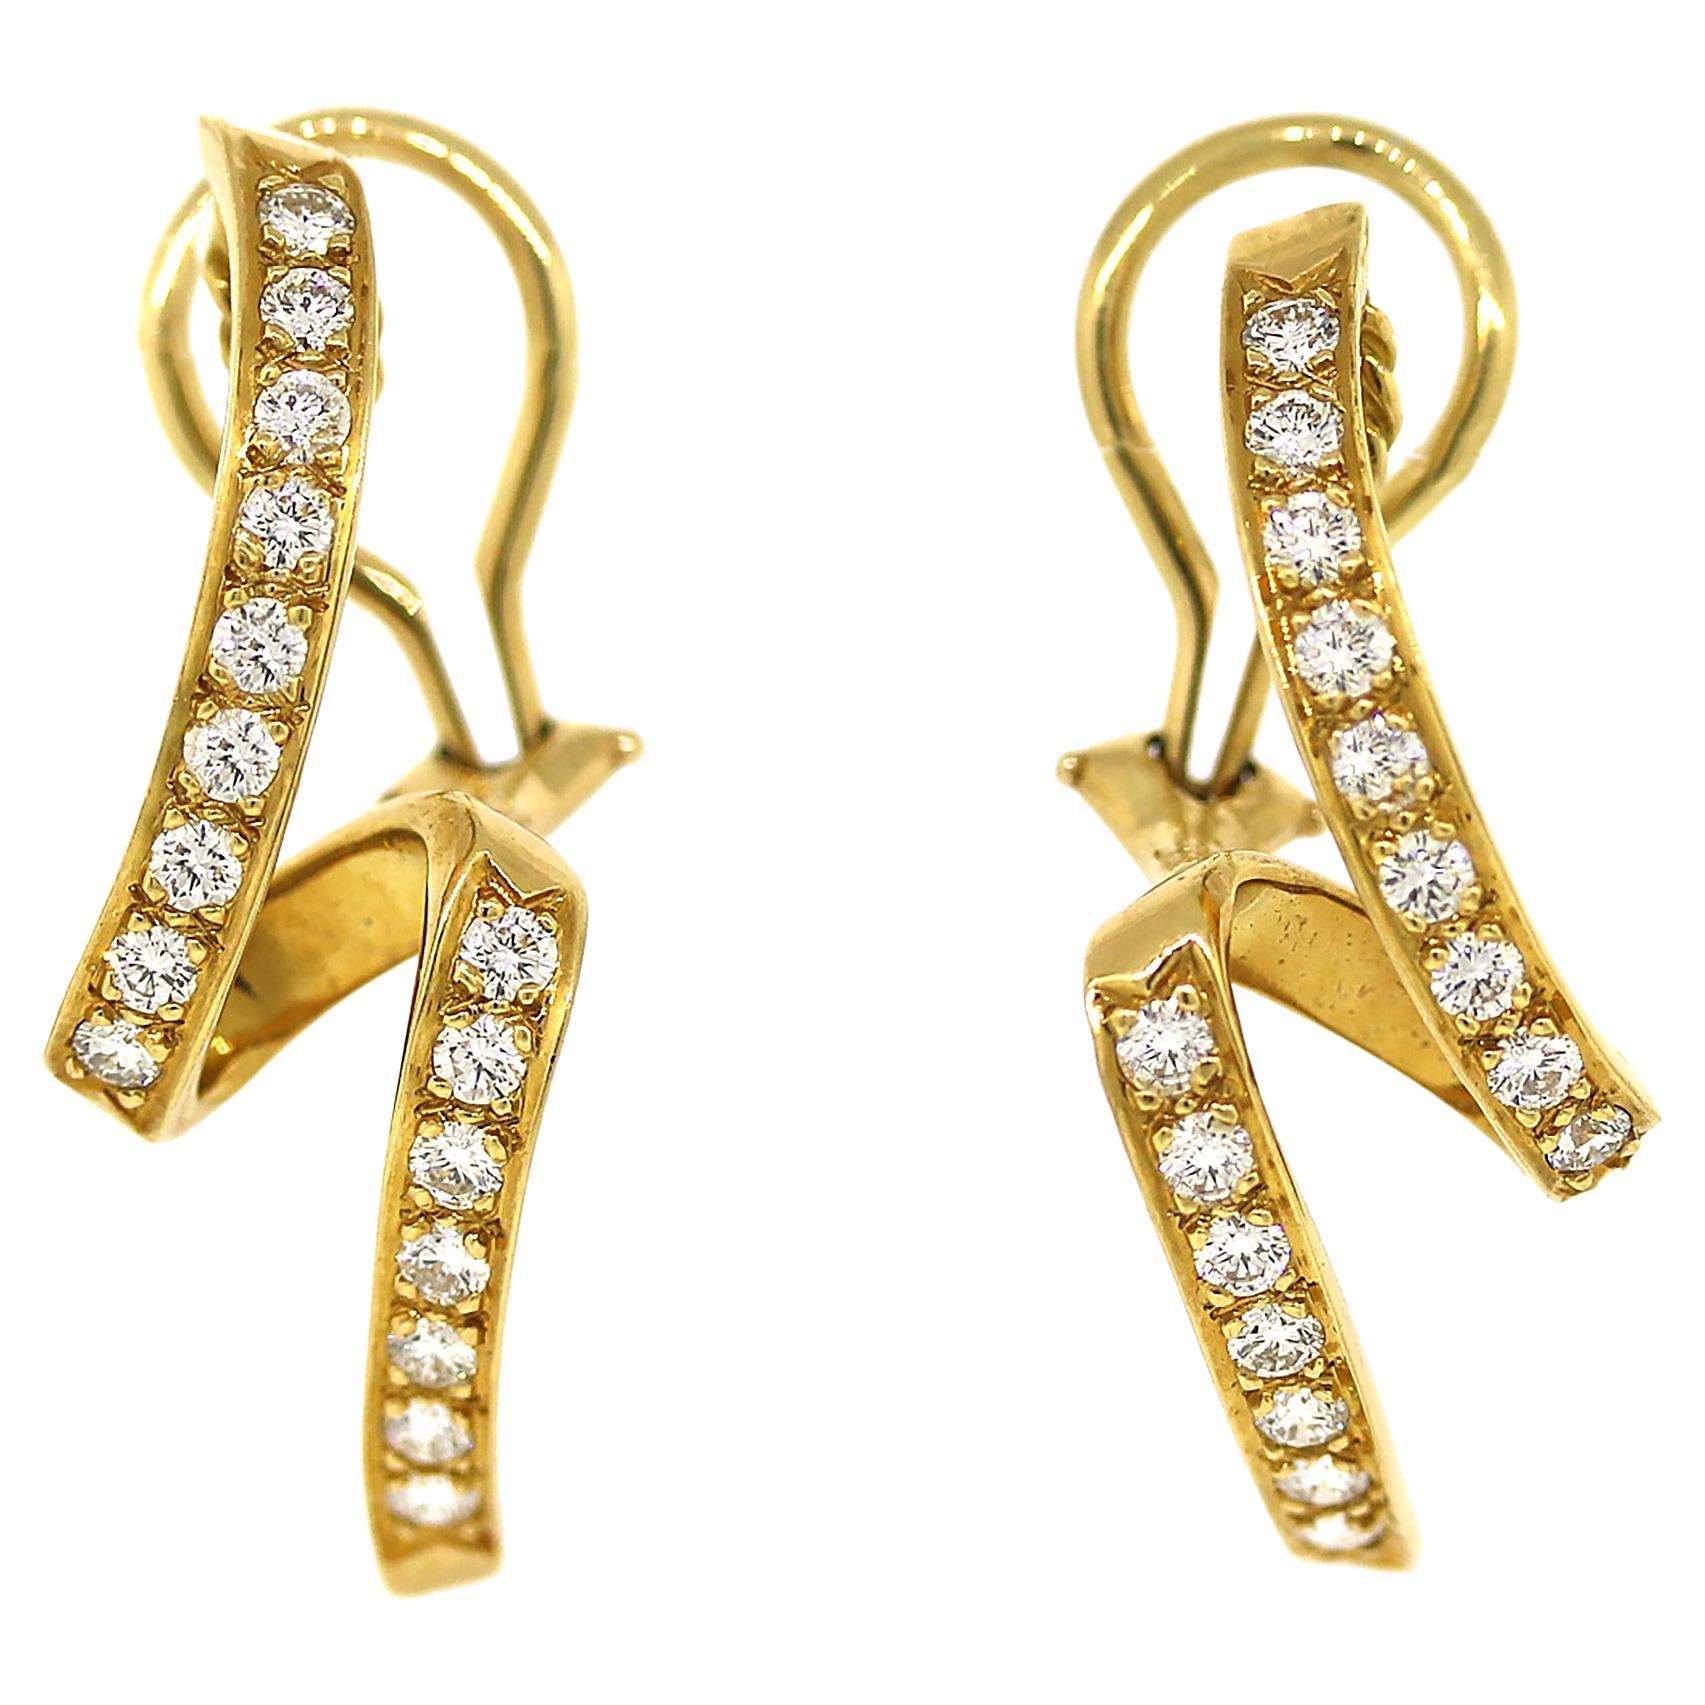 1.05 carats Diamond Swirl Earrings in Yellow Gold For Sale